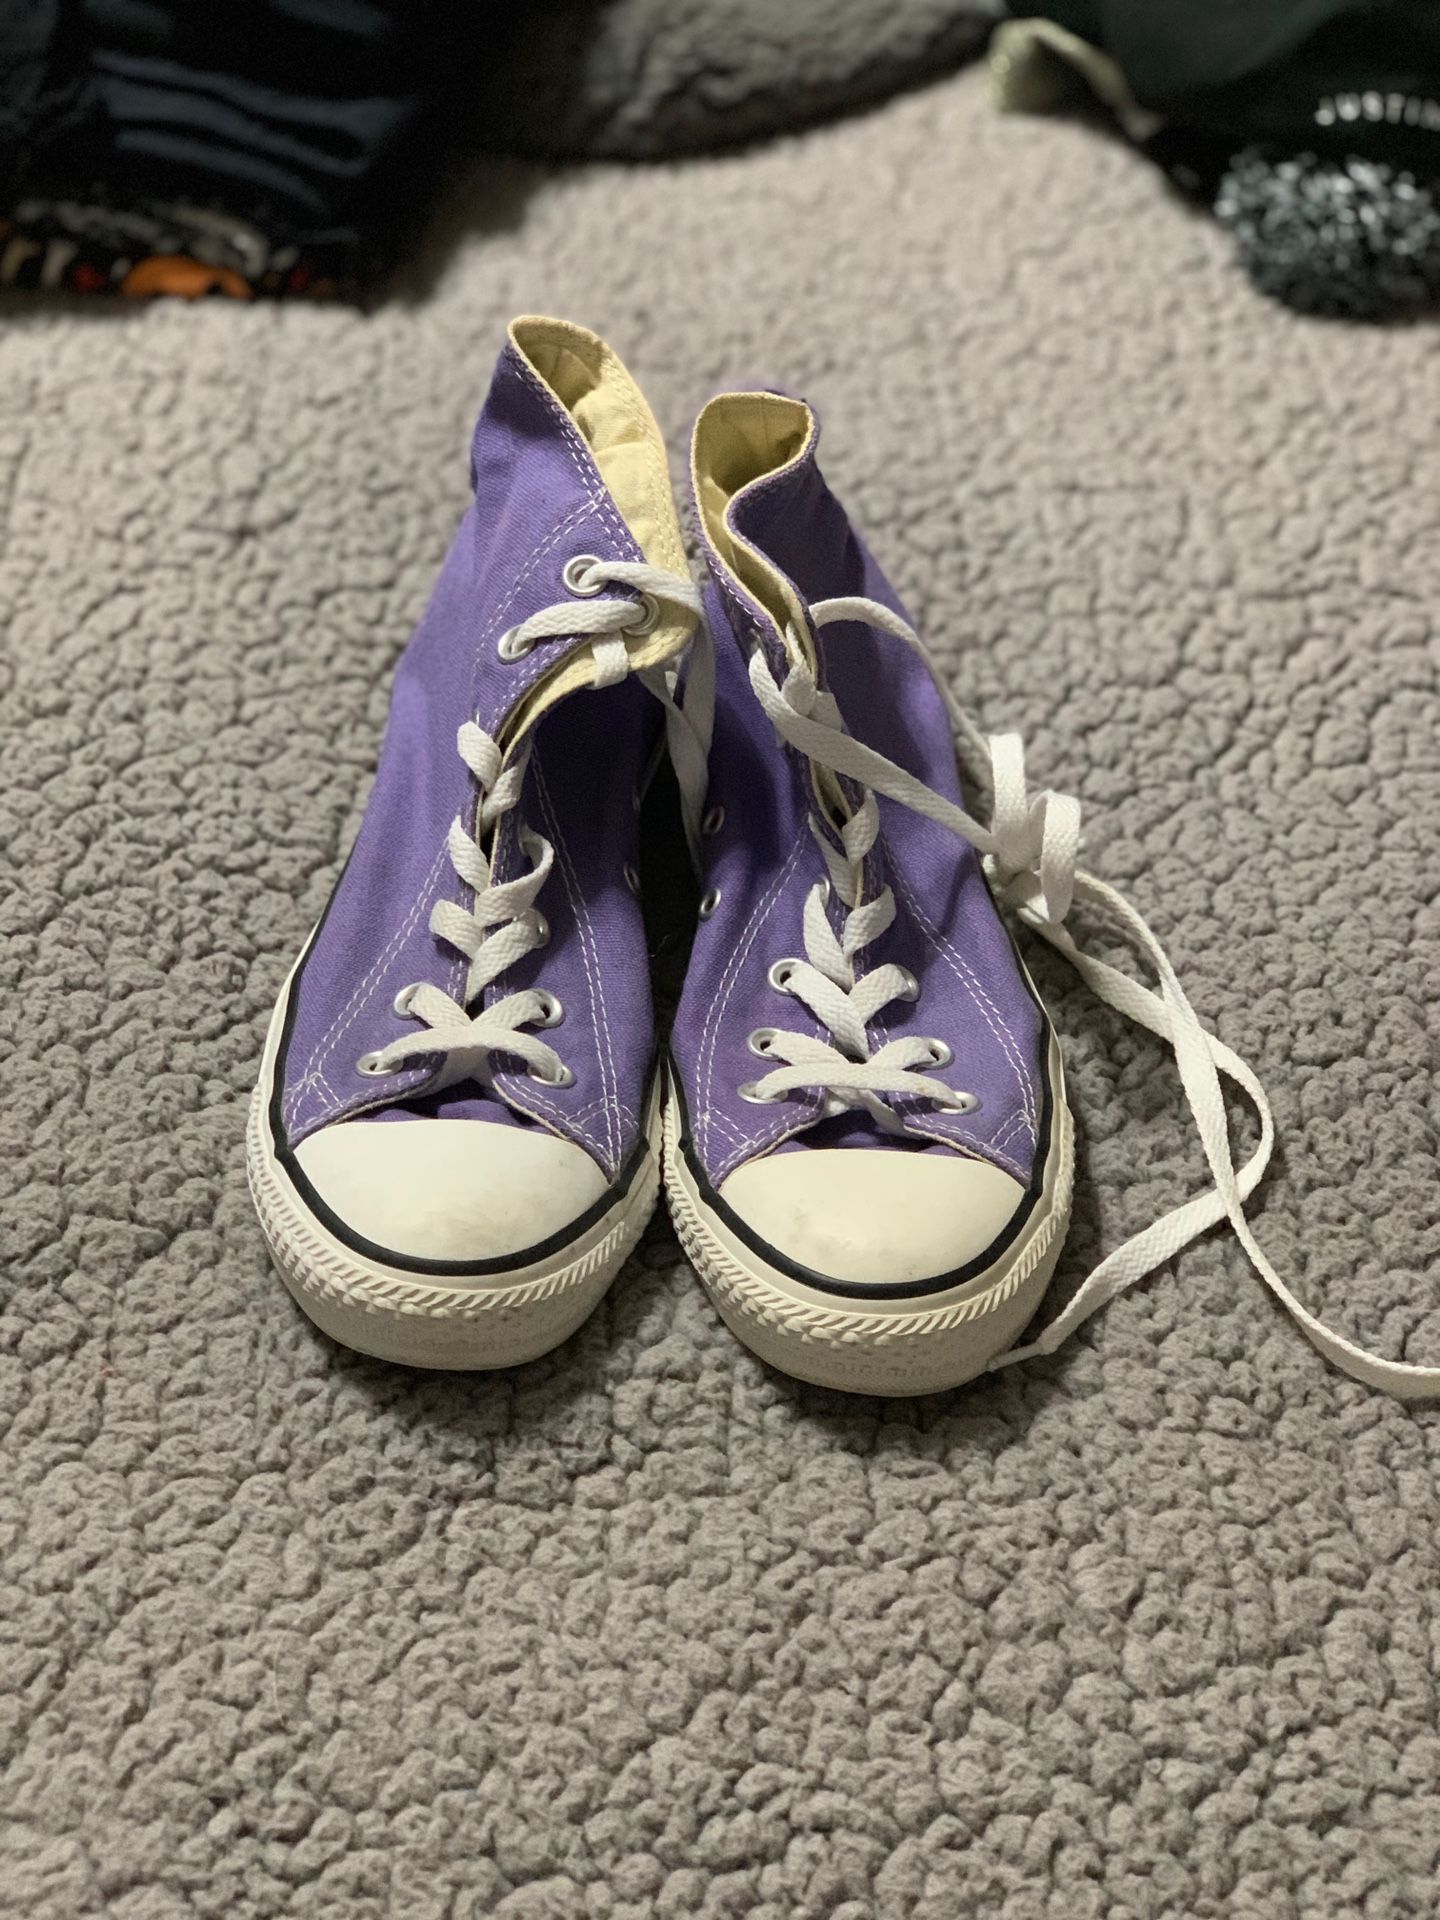 Purple converse